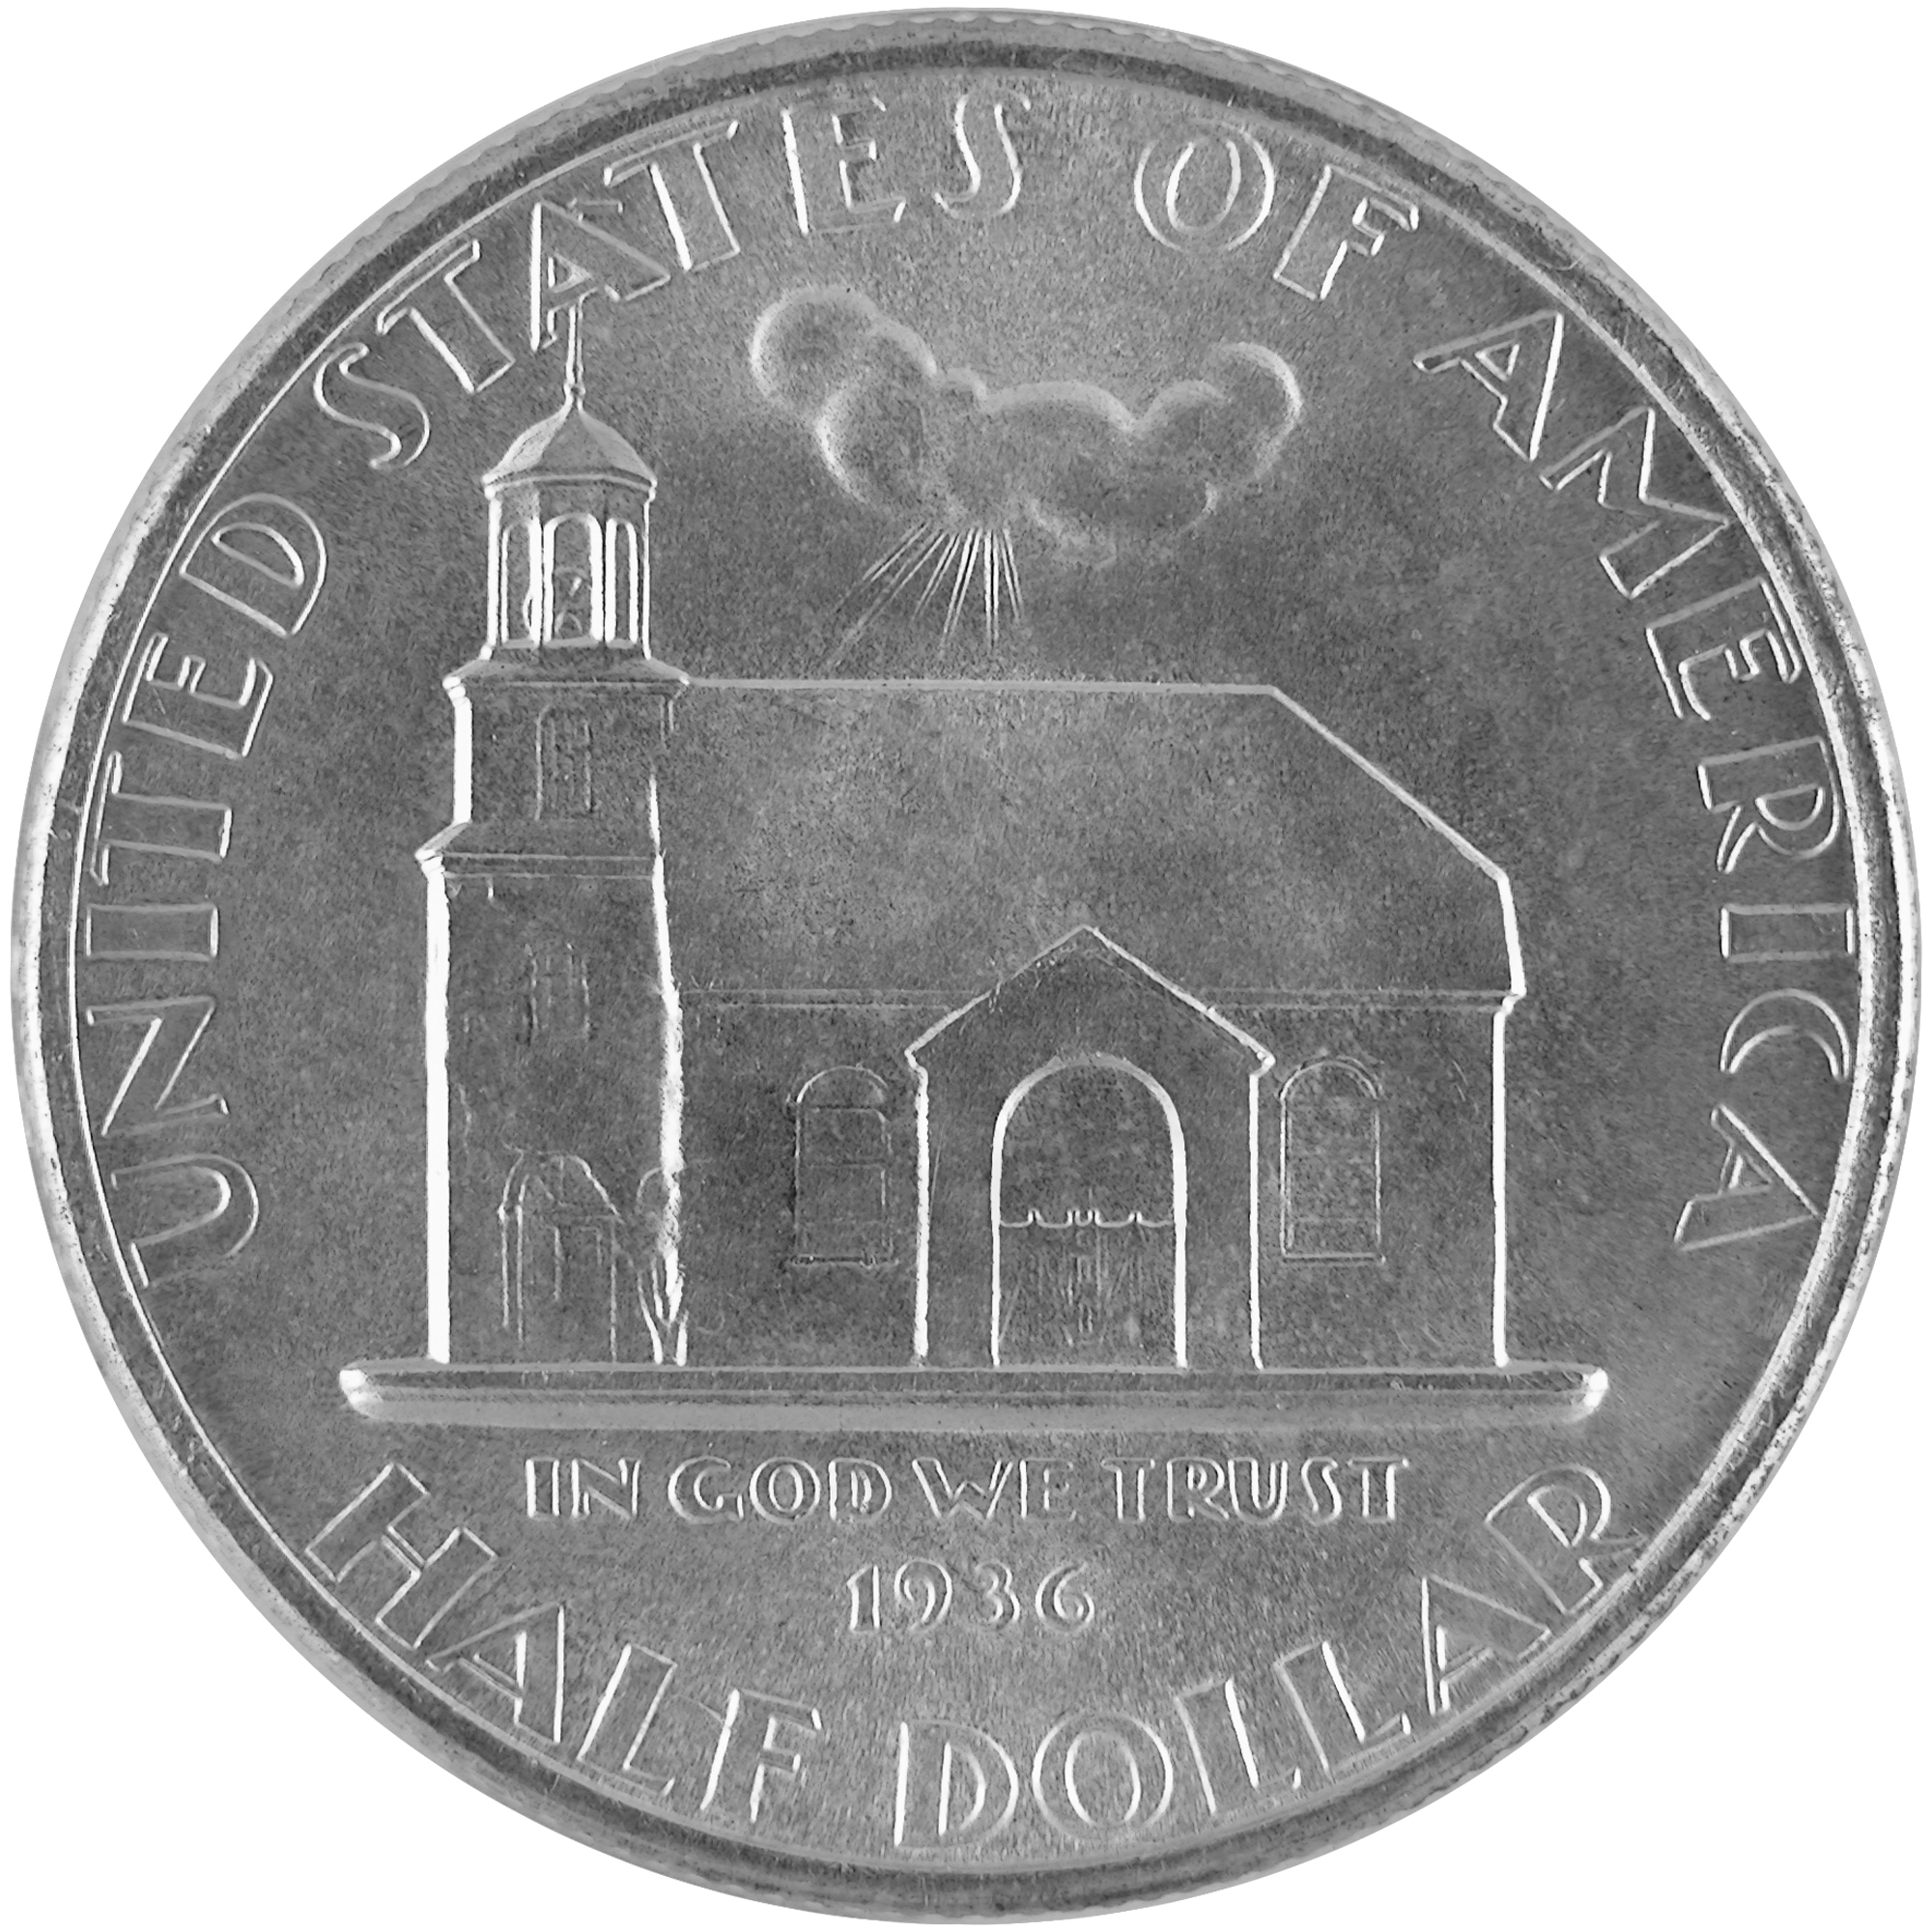 1938 Delaware Tercentenary Commemorative Silver Half Dollar Coin Obverse